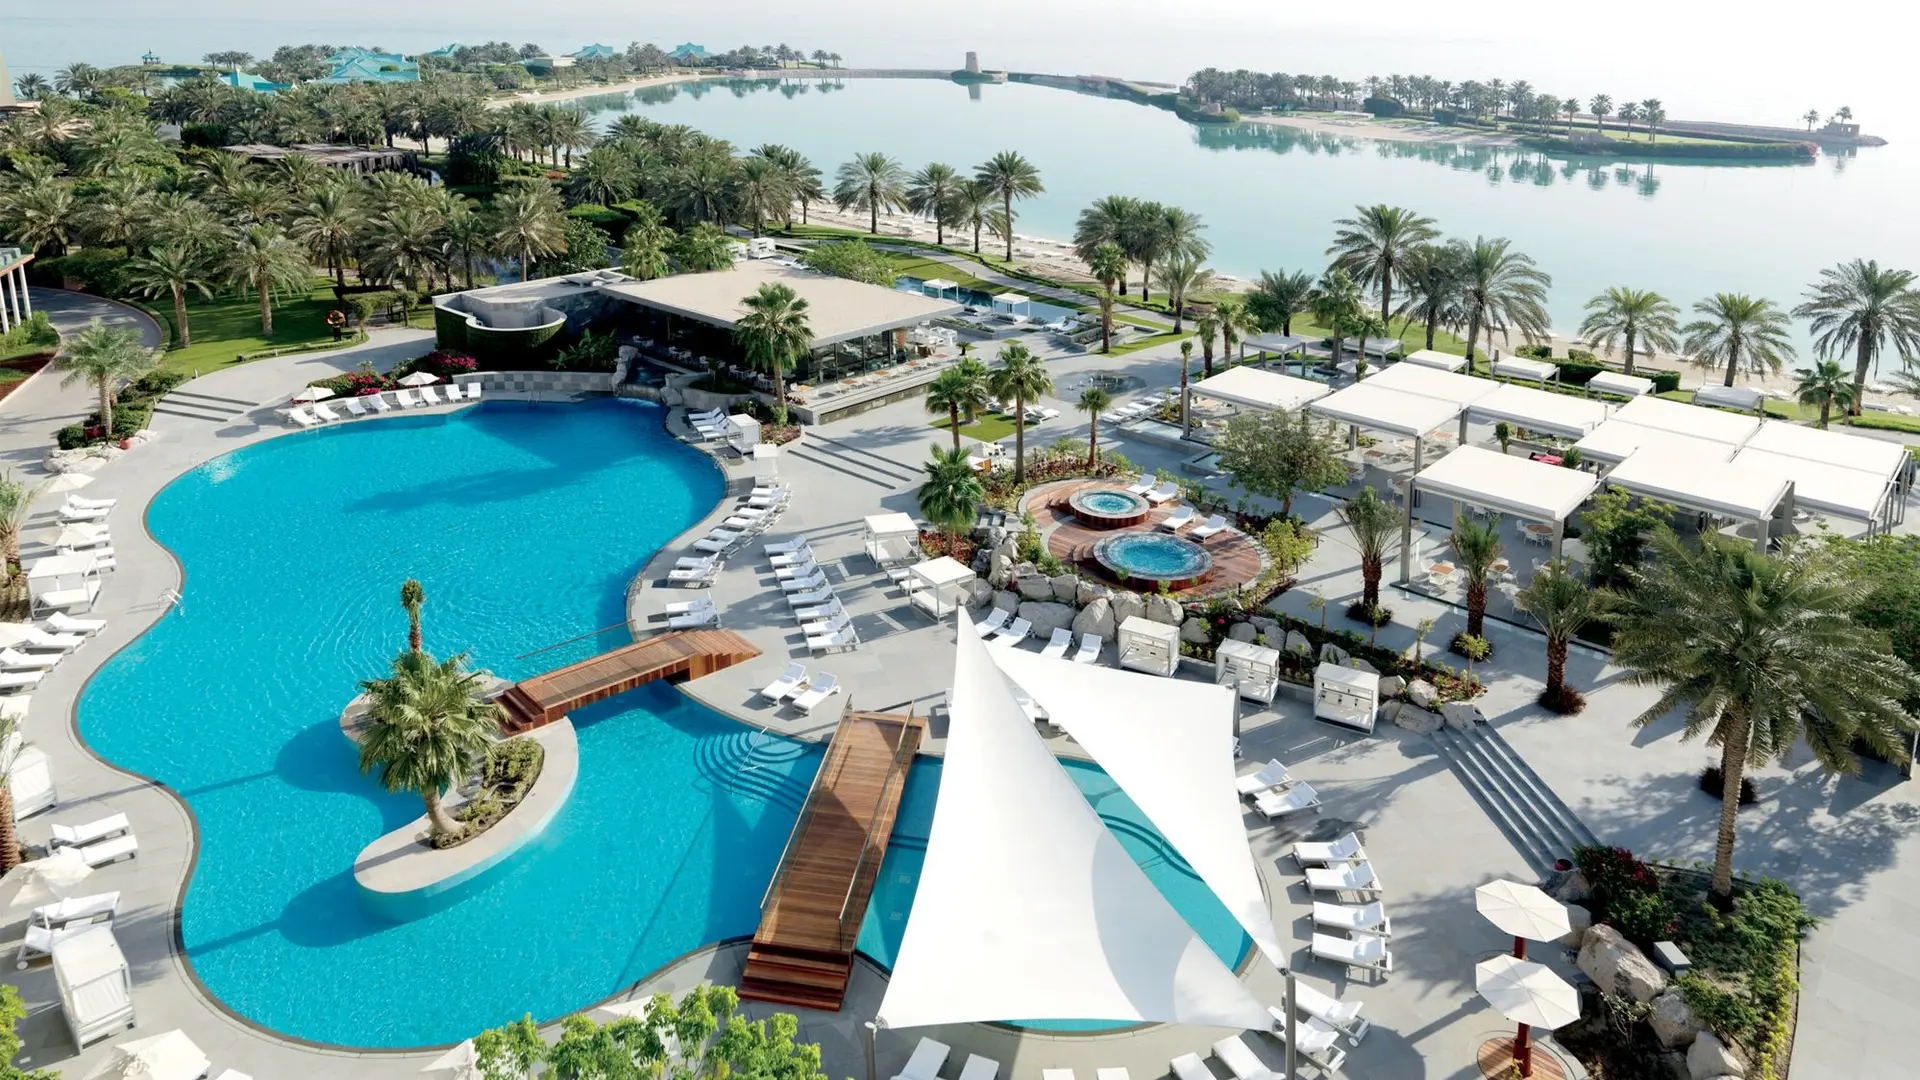 Hotel review Service & Facilities' - The Ritz-Carlton, Bahrain - 0